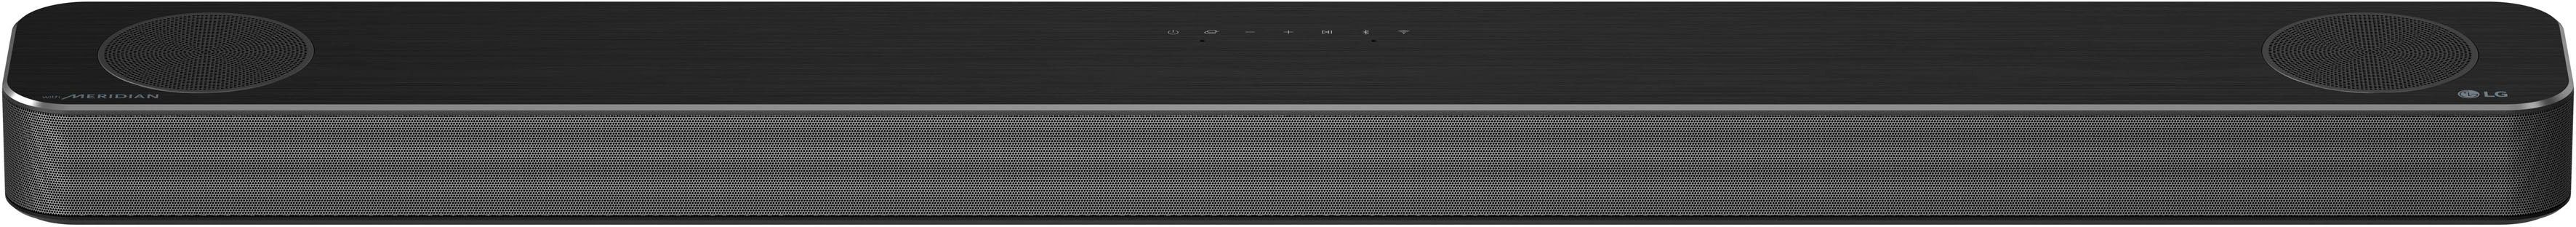 LG SPD75YA 3.1.2 Soundbar (Bluetooth, (WiFi), W) 400 WLAN